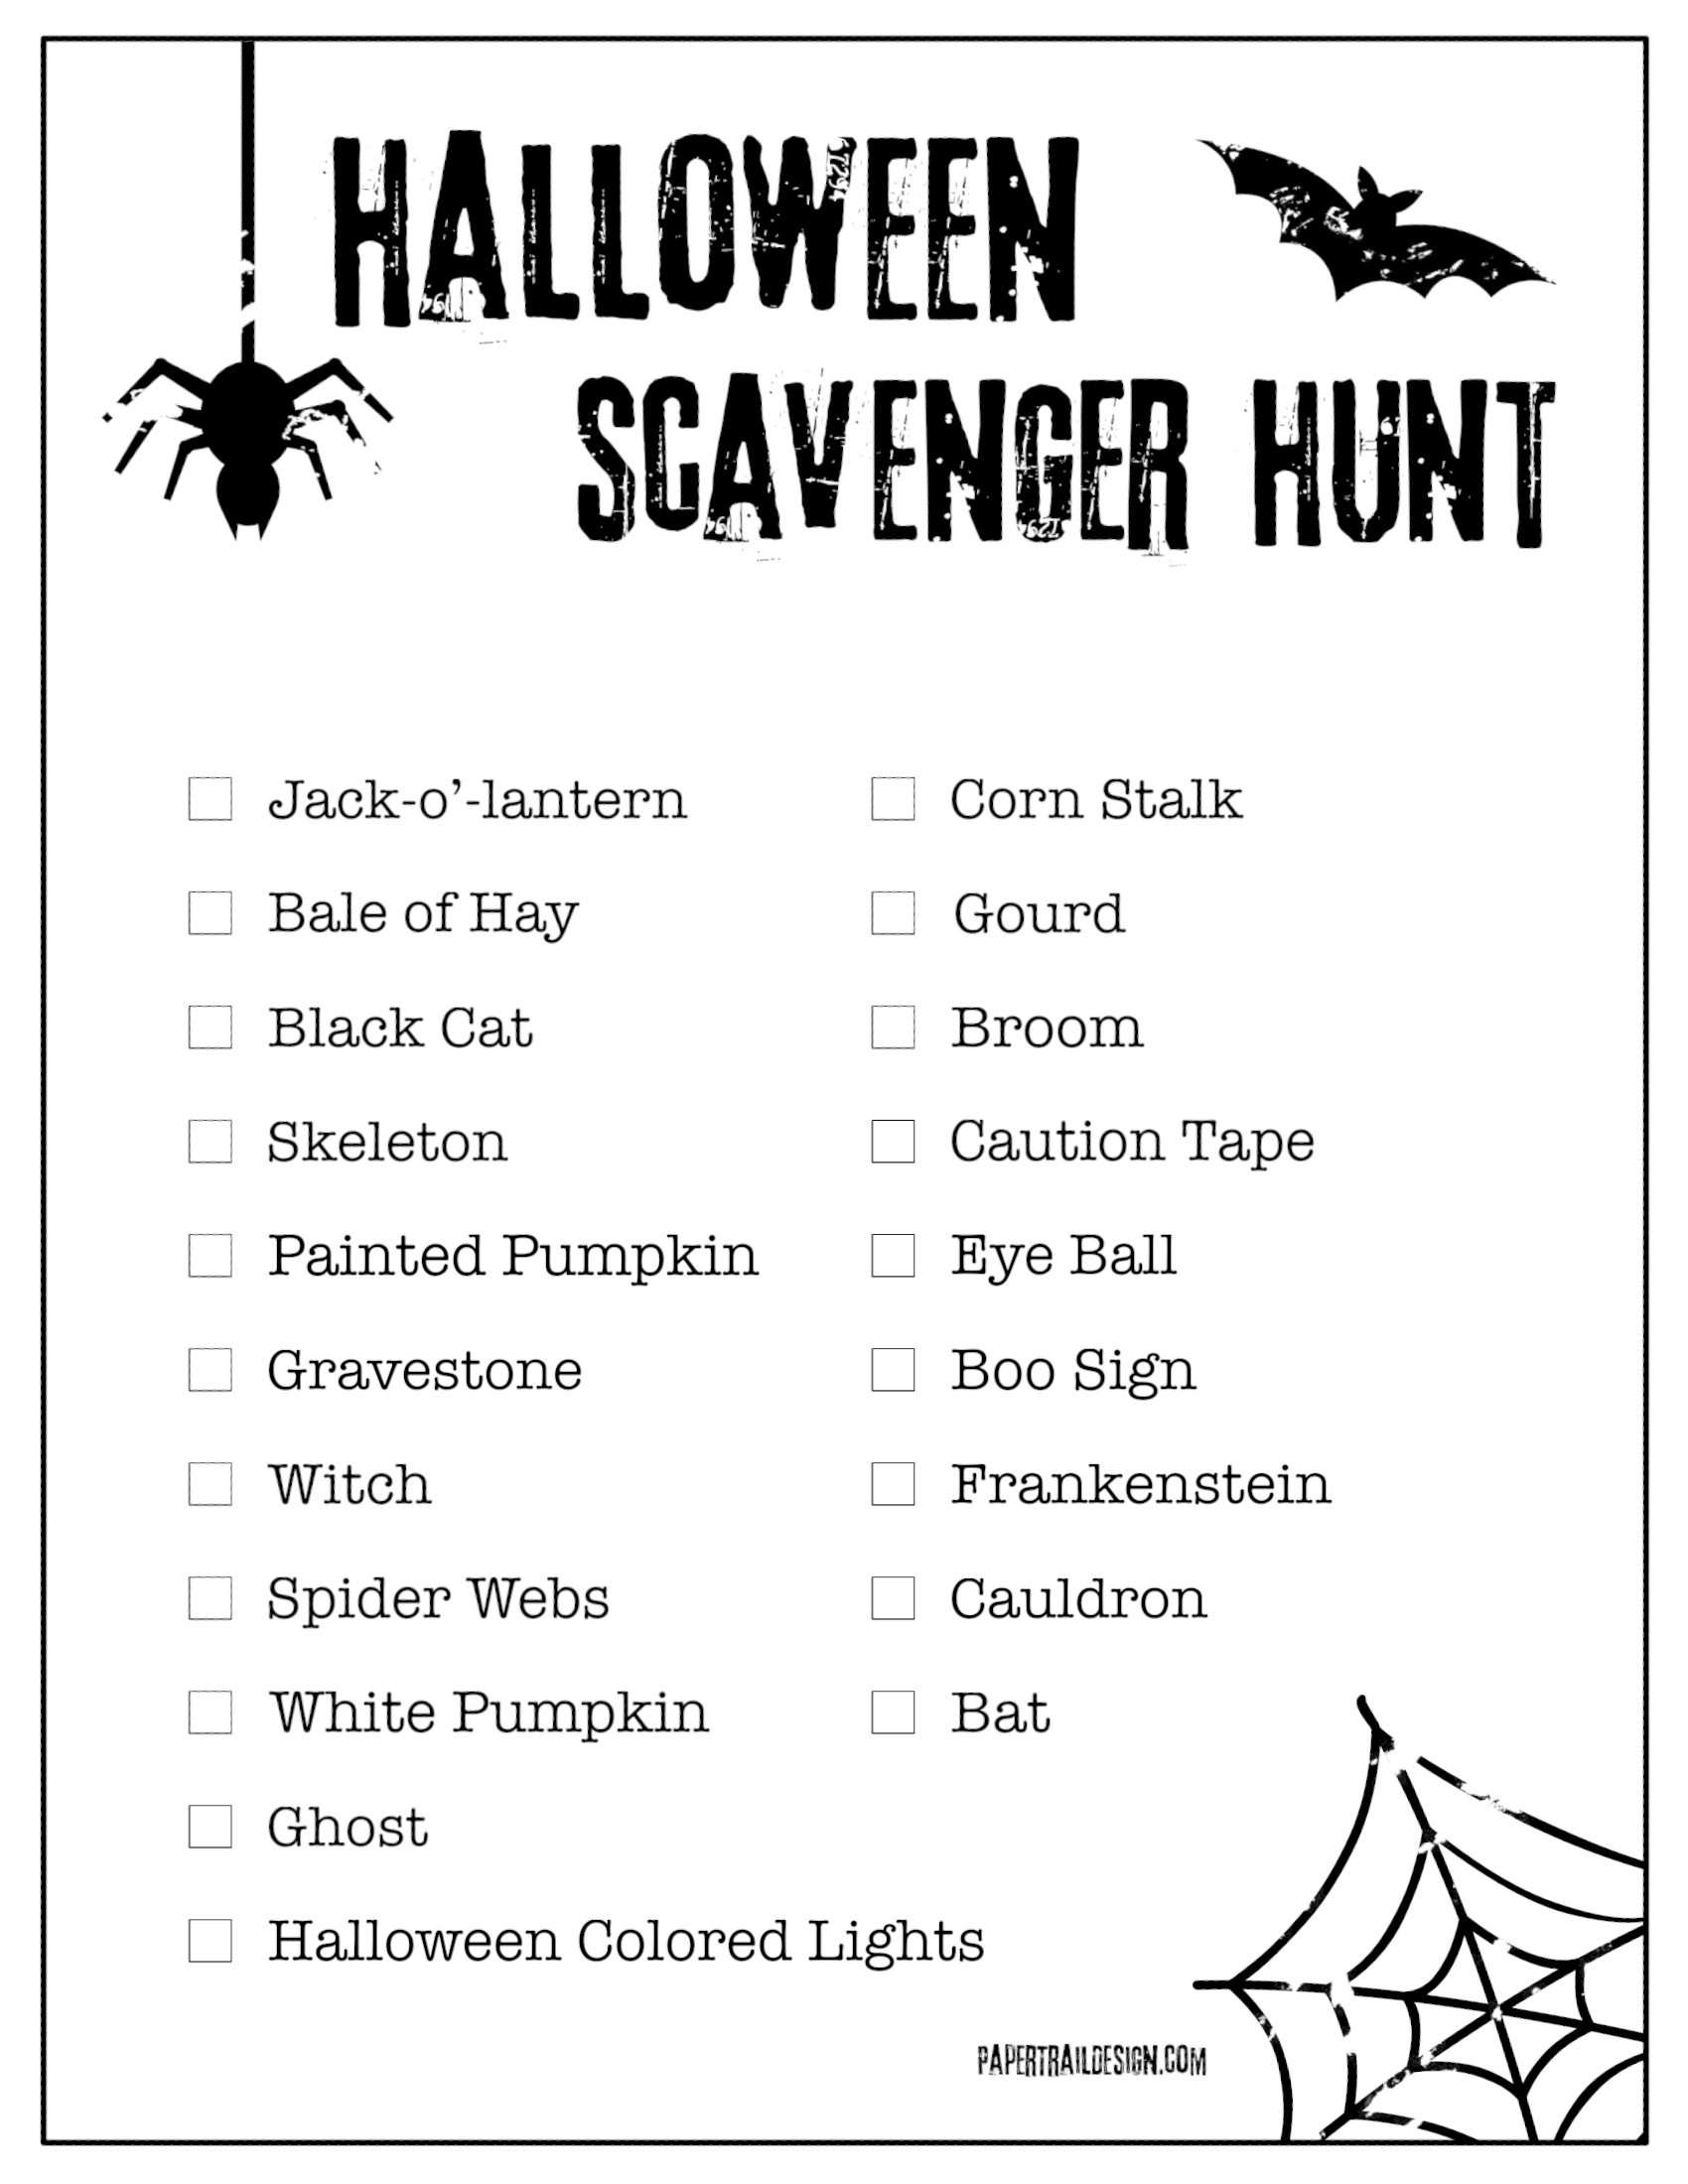 Free Printable Halloween Scavenger Hunt List Paper Trail Design